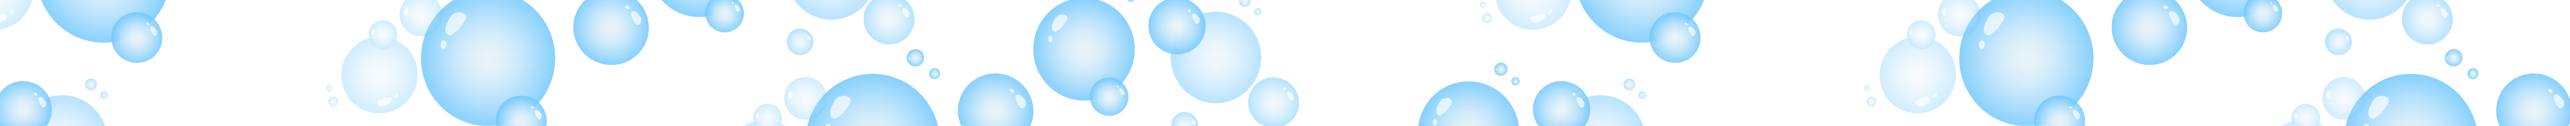 Decorative blue bubbles on white background